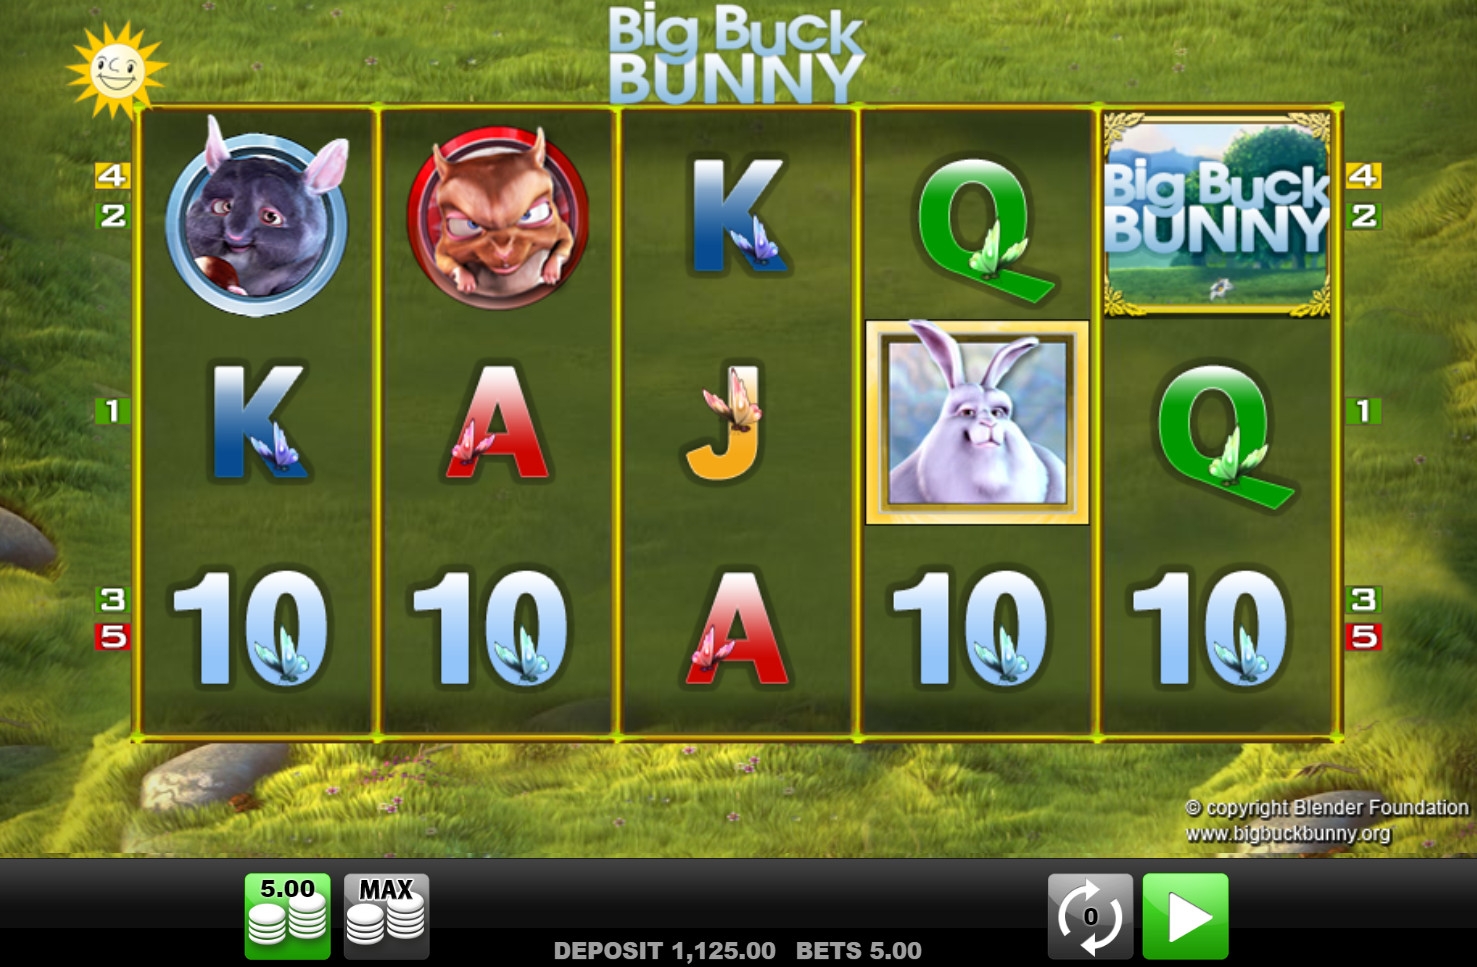 Big Buck Bunny (Big Buck Bunny) from category Slots